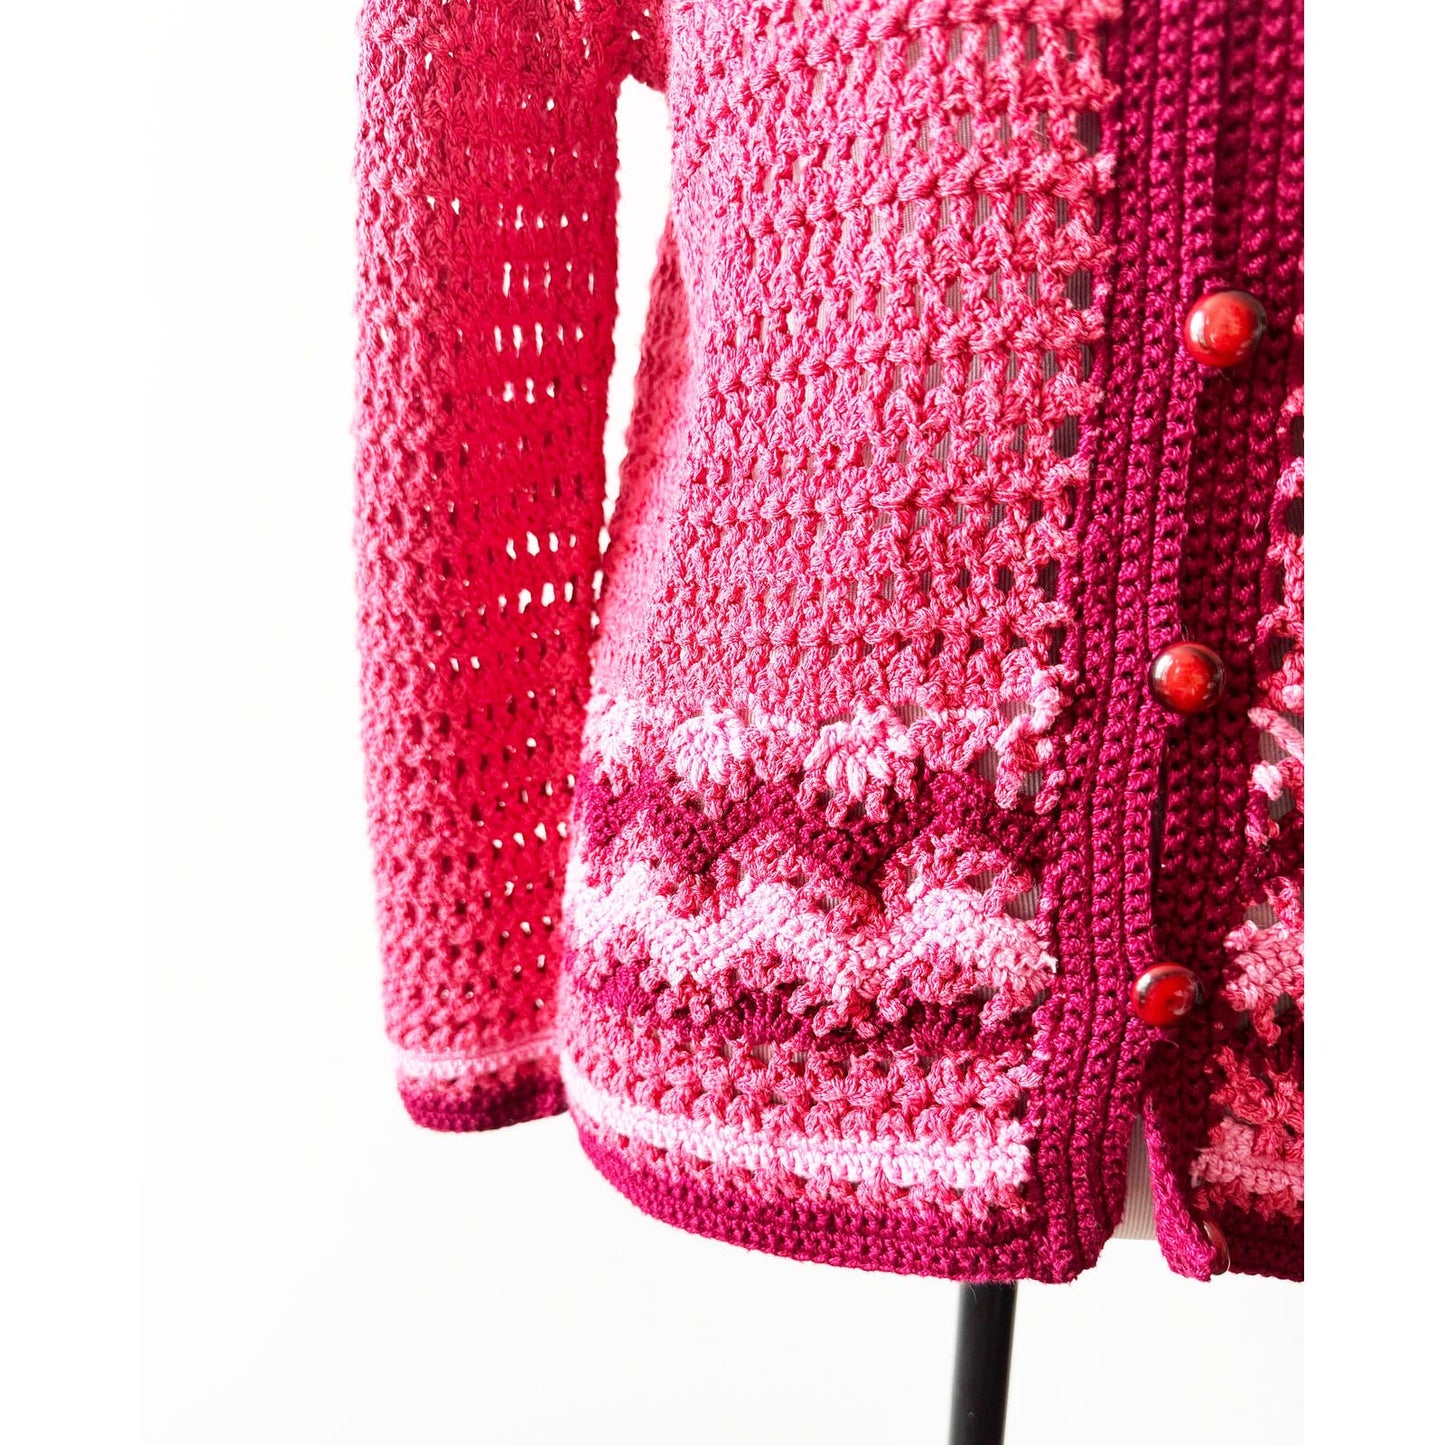 Y2k ANNA SUI Pink Knit Cardigan | James Coviello x Anna Sui | Size Small or Medium